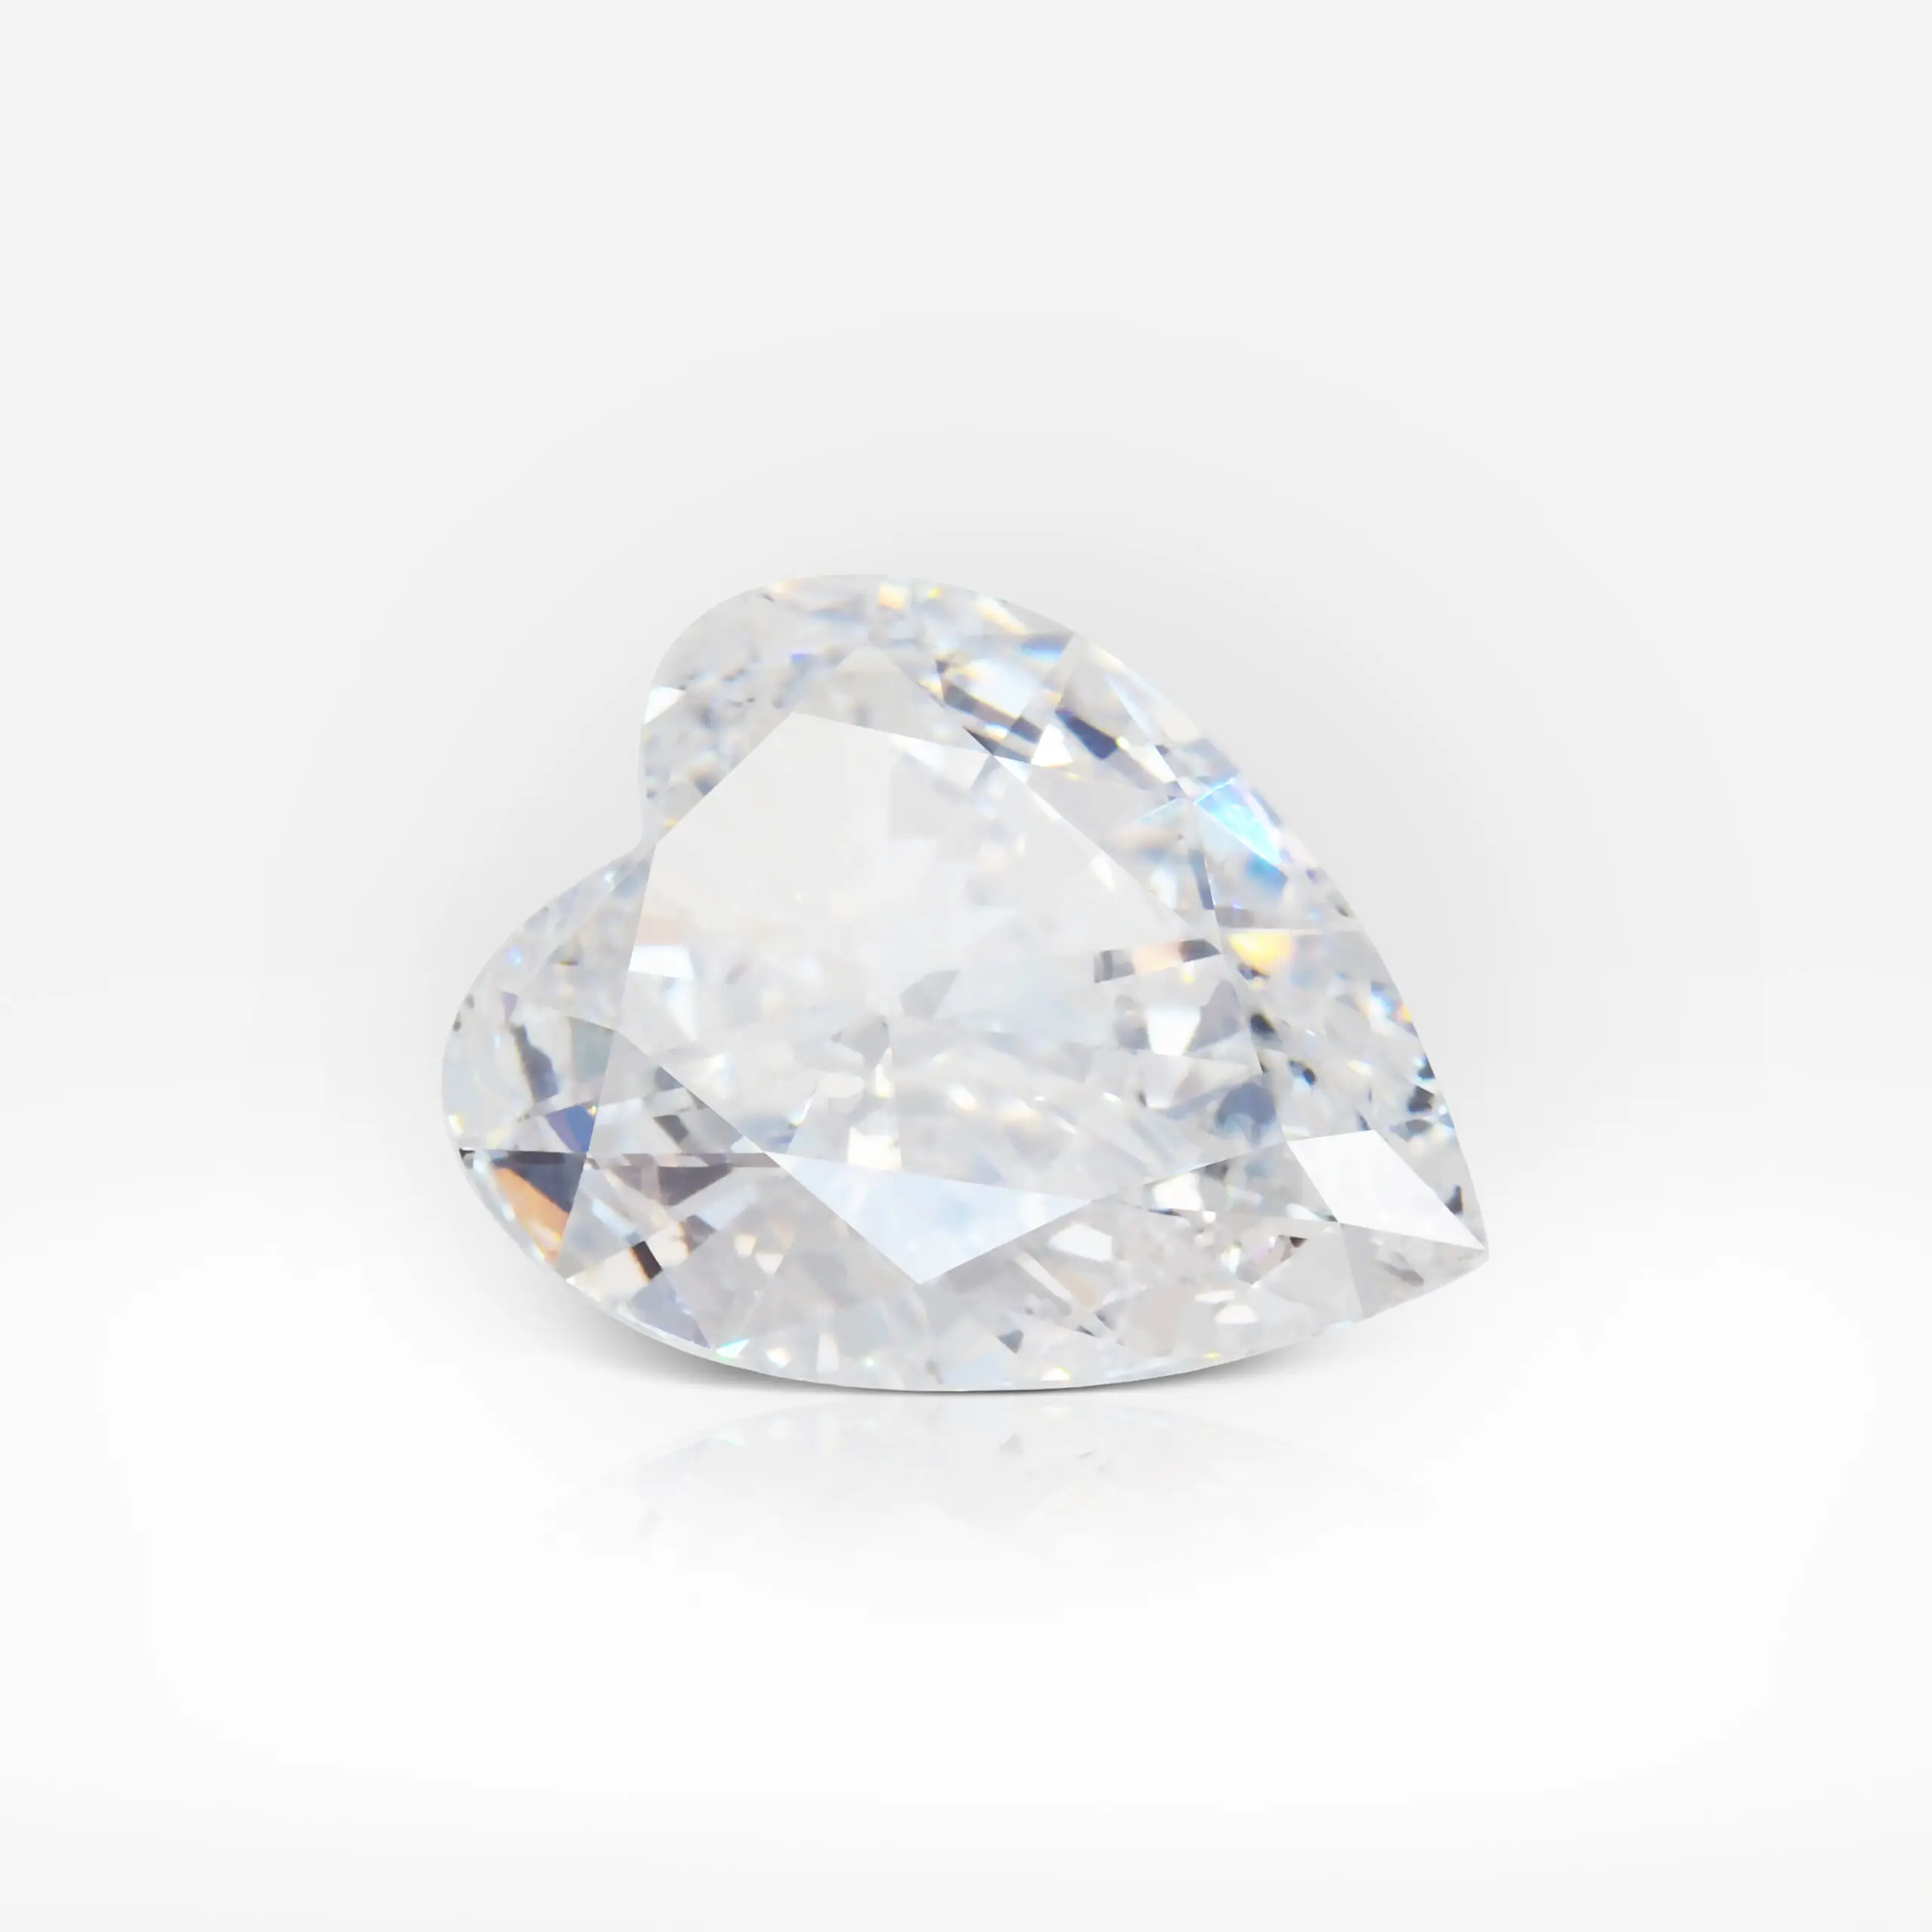 3.11 carat G SI2 Heart Shape Diamond HRD - picture 1